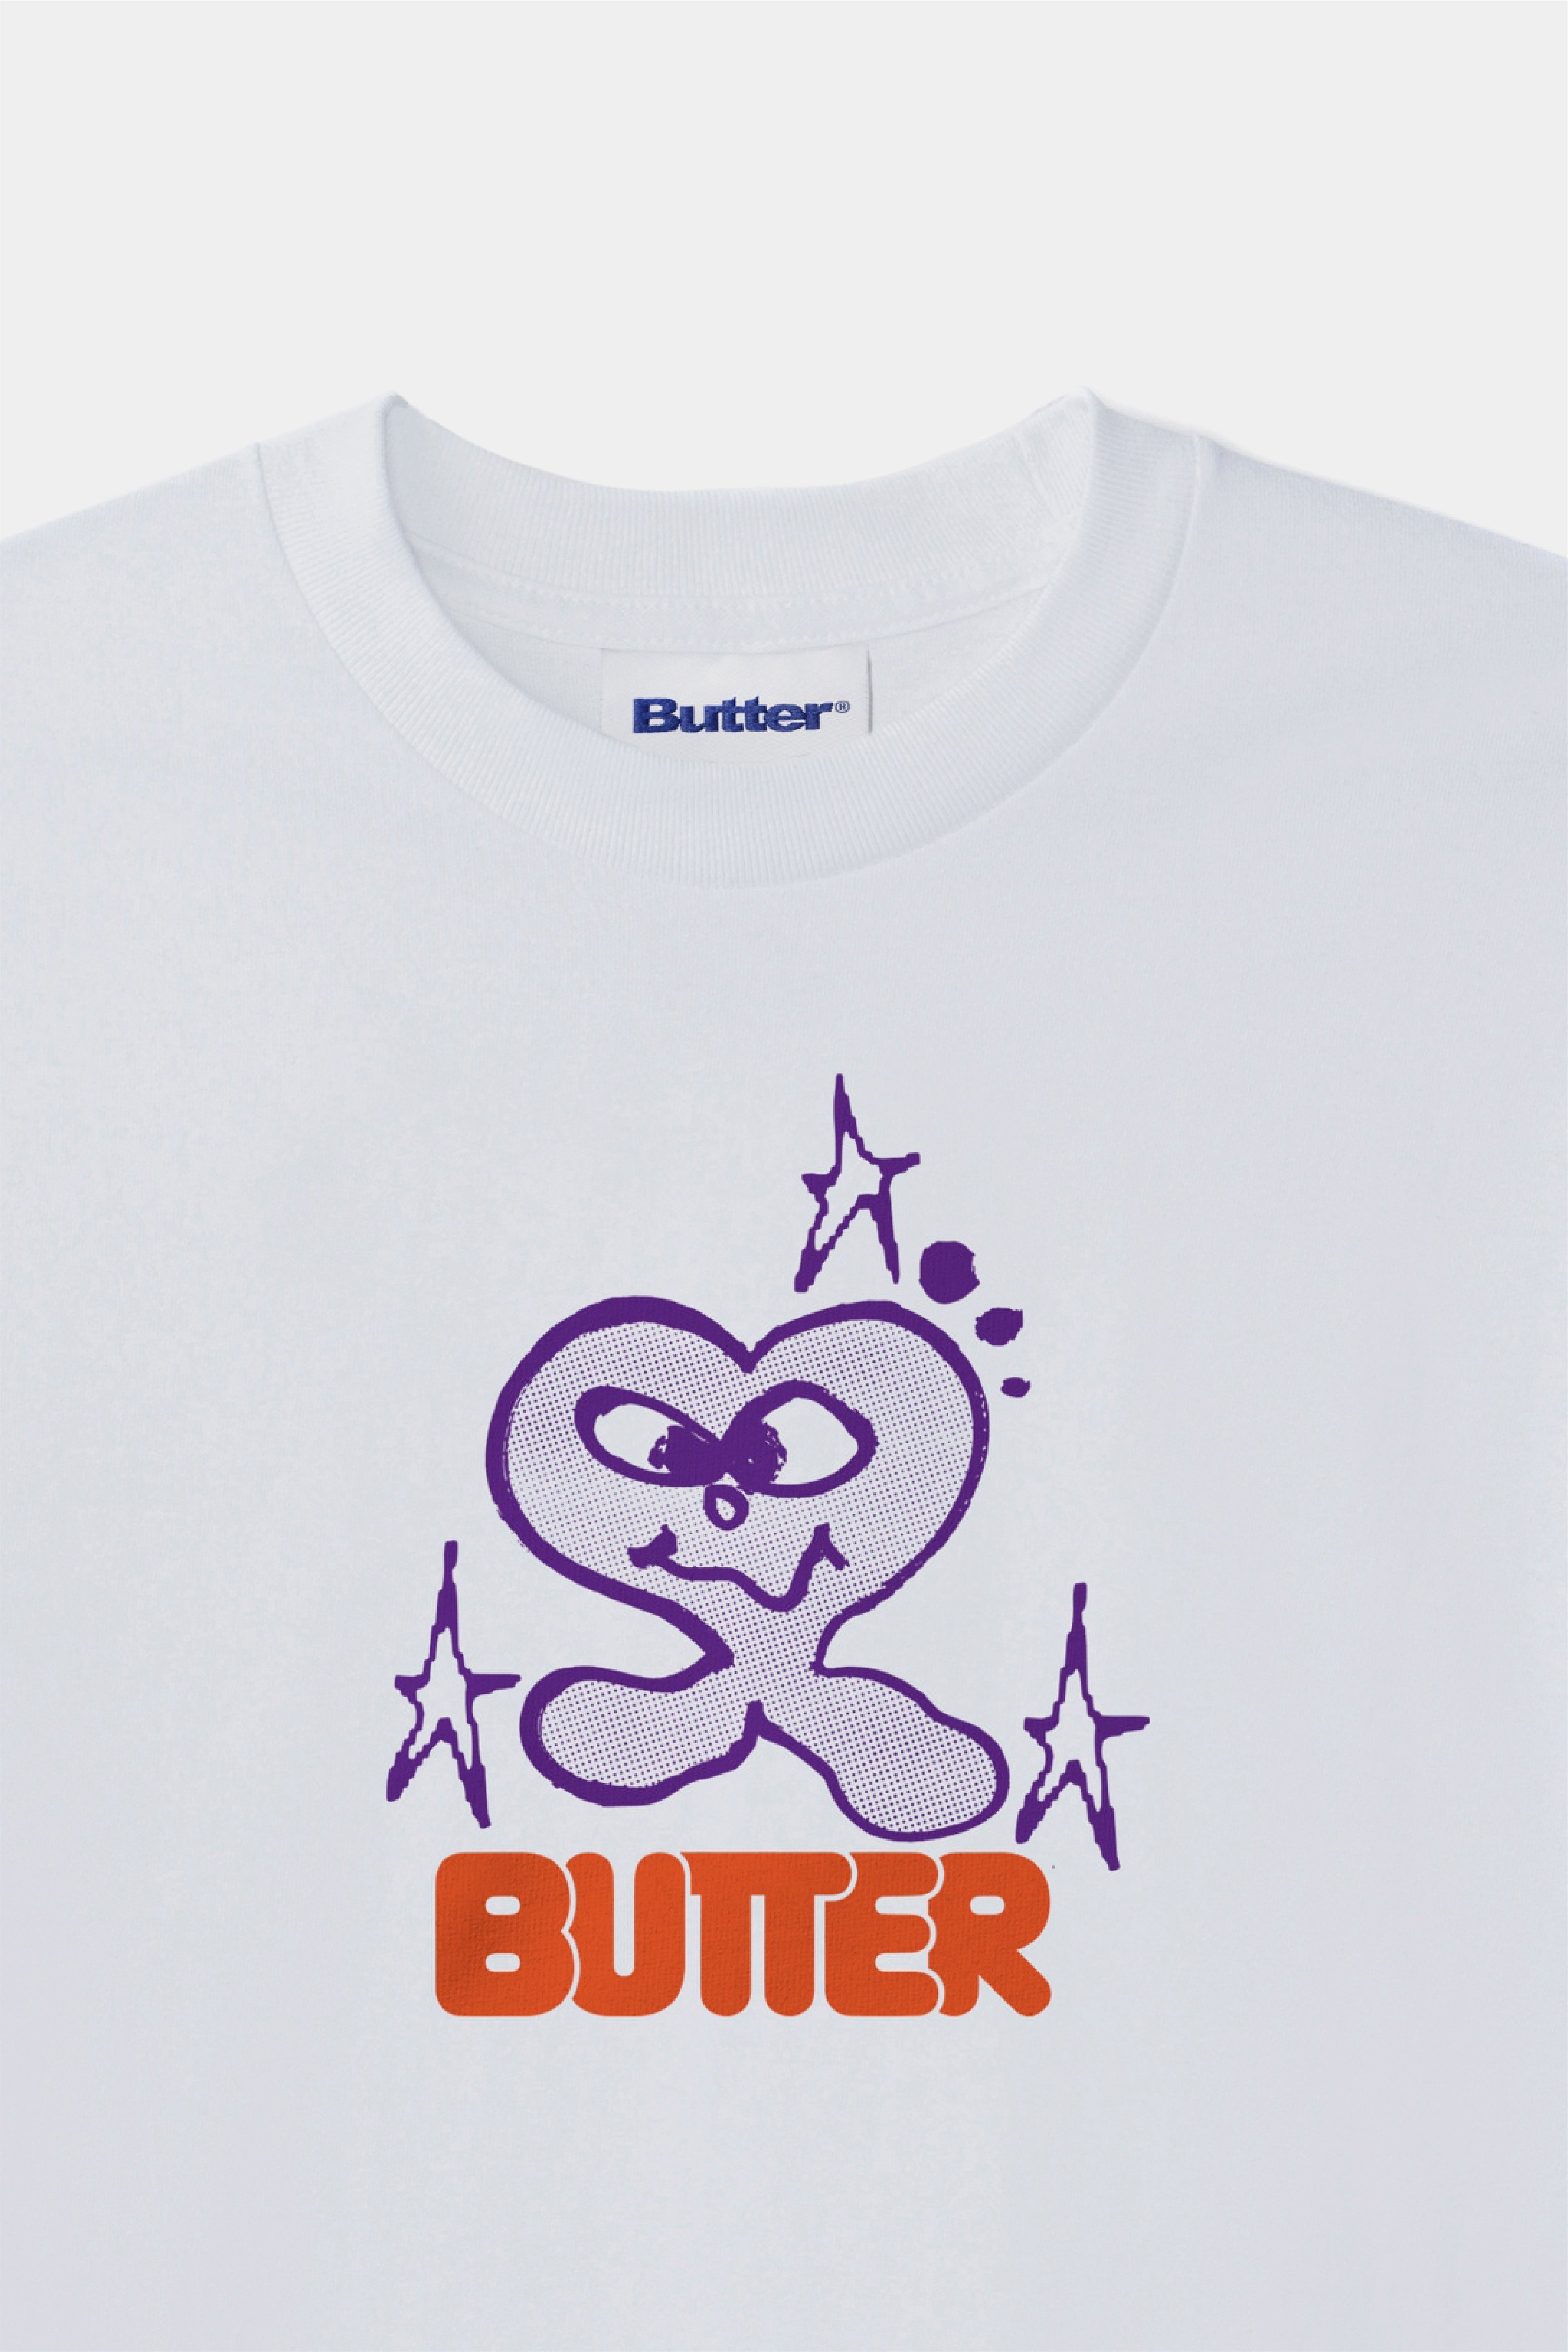 Selectshop FRAME - BUTTER GOODS Heart Tee T-Shirts Dubai